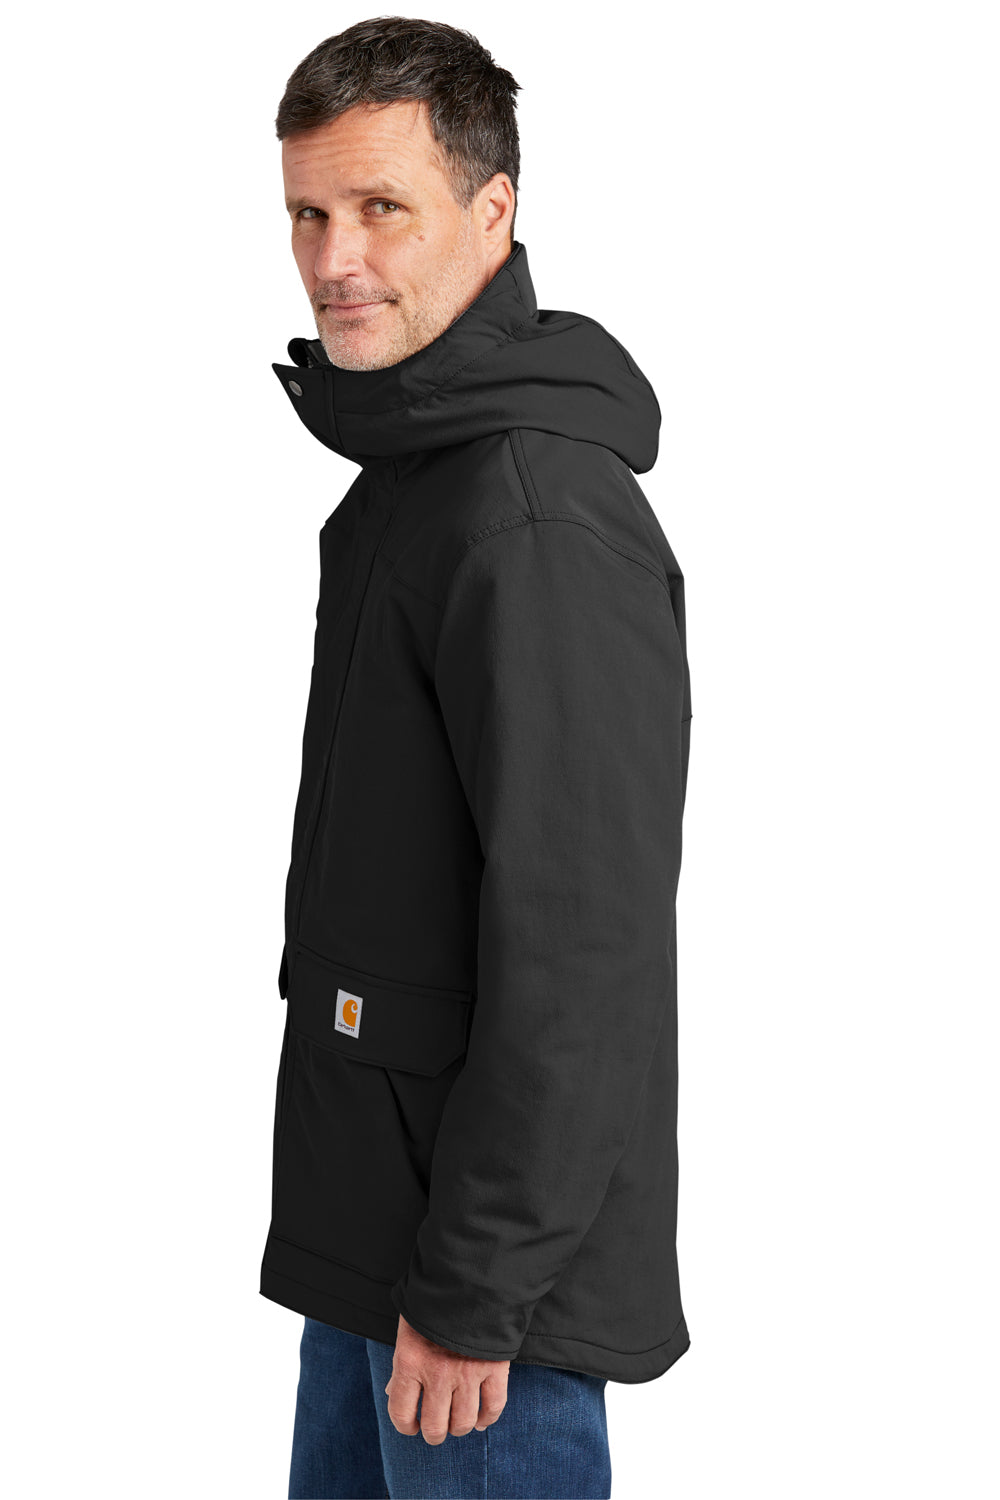 Carhartt CT105533 Mens Super Dux Wind & Water Resistant Full Zip Hooded Jacket Black Model Side